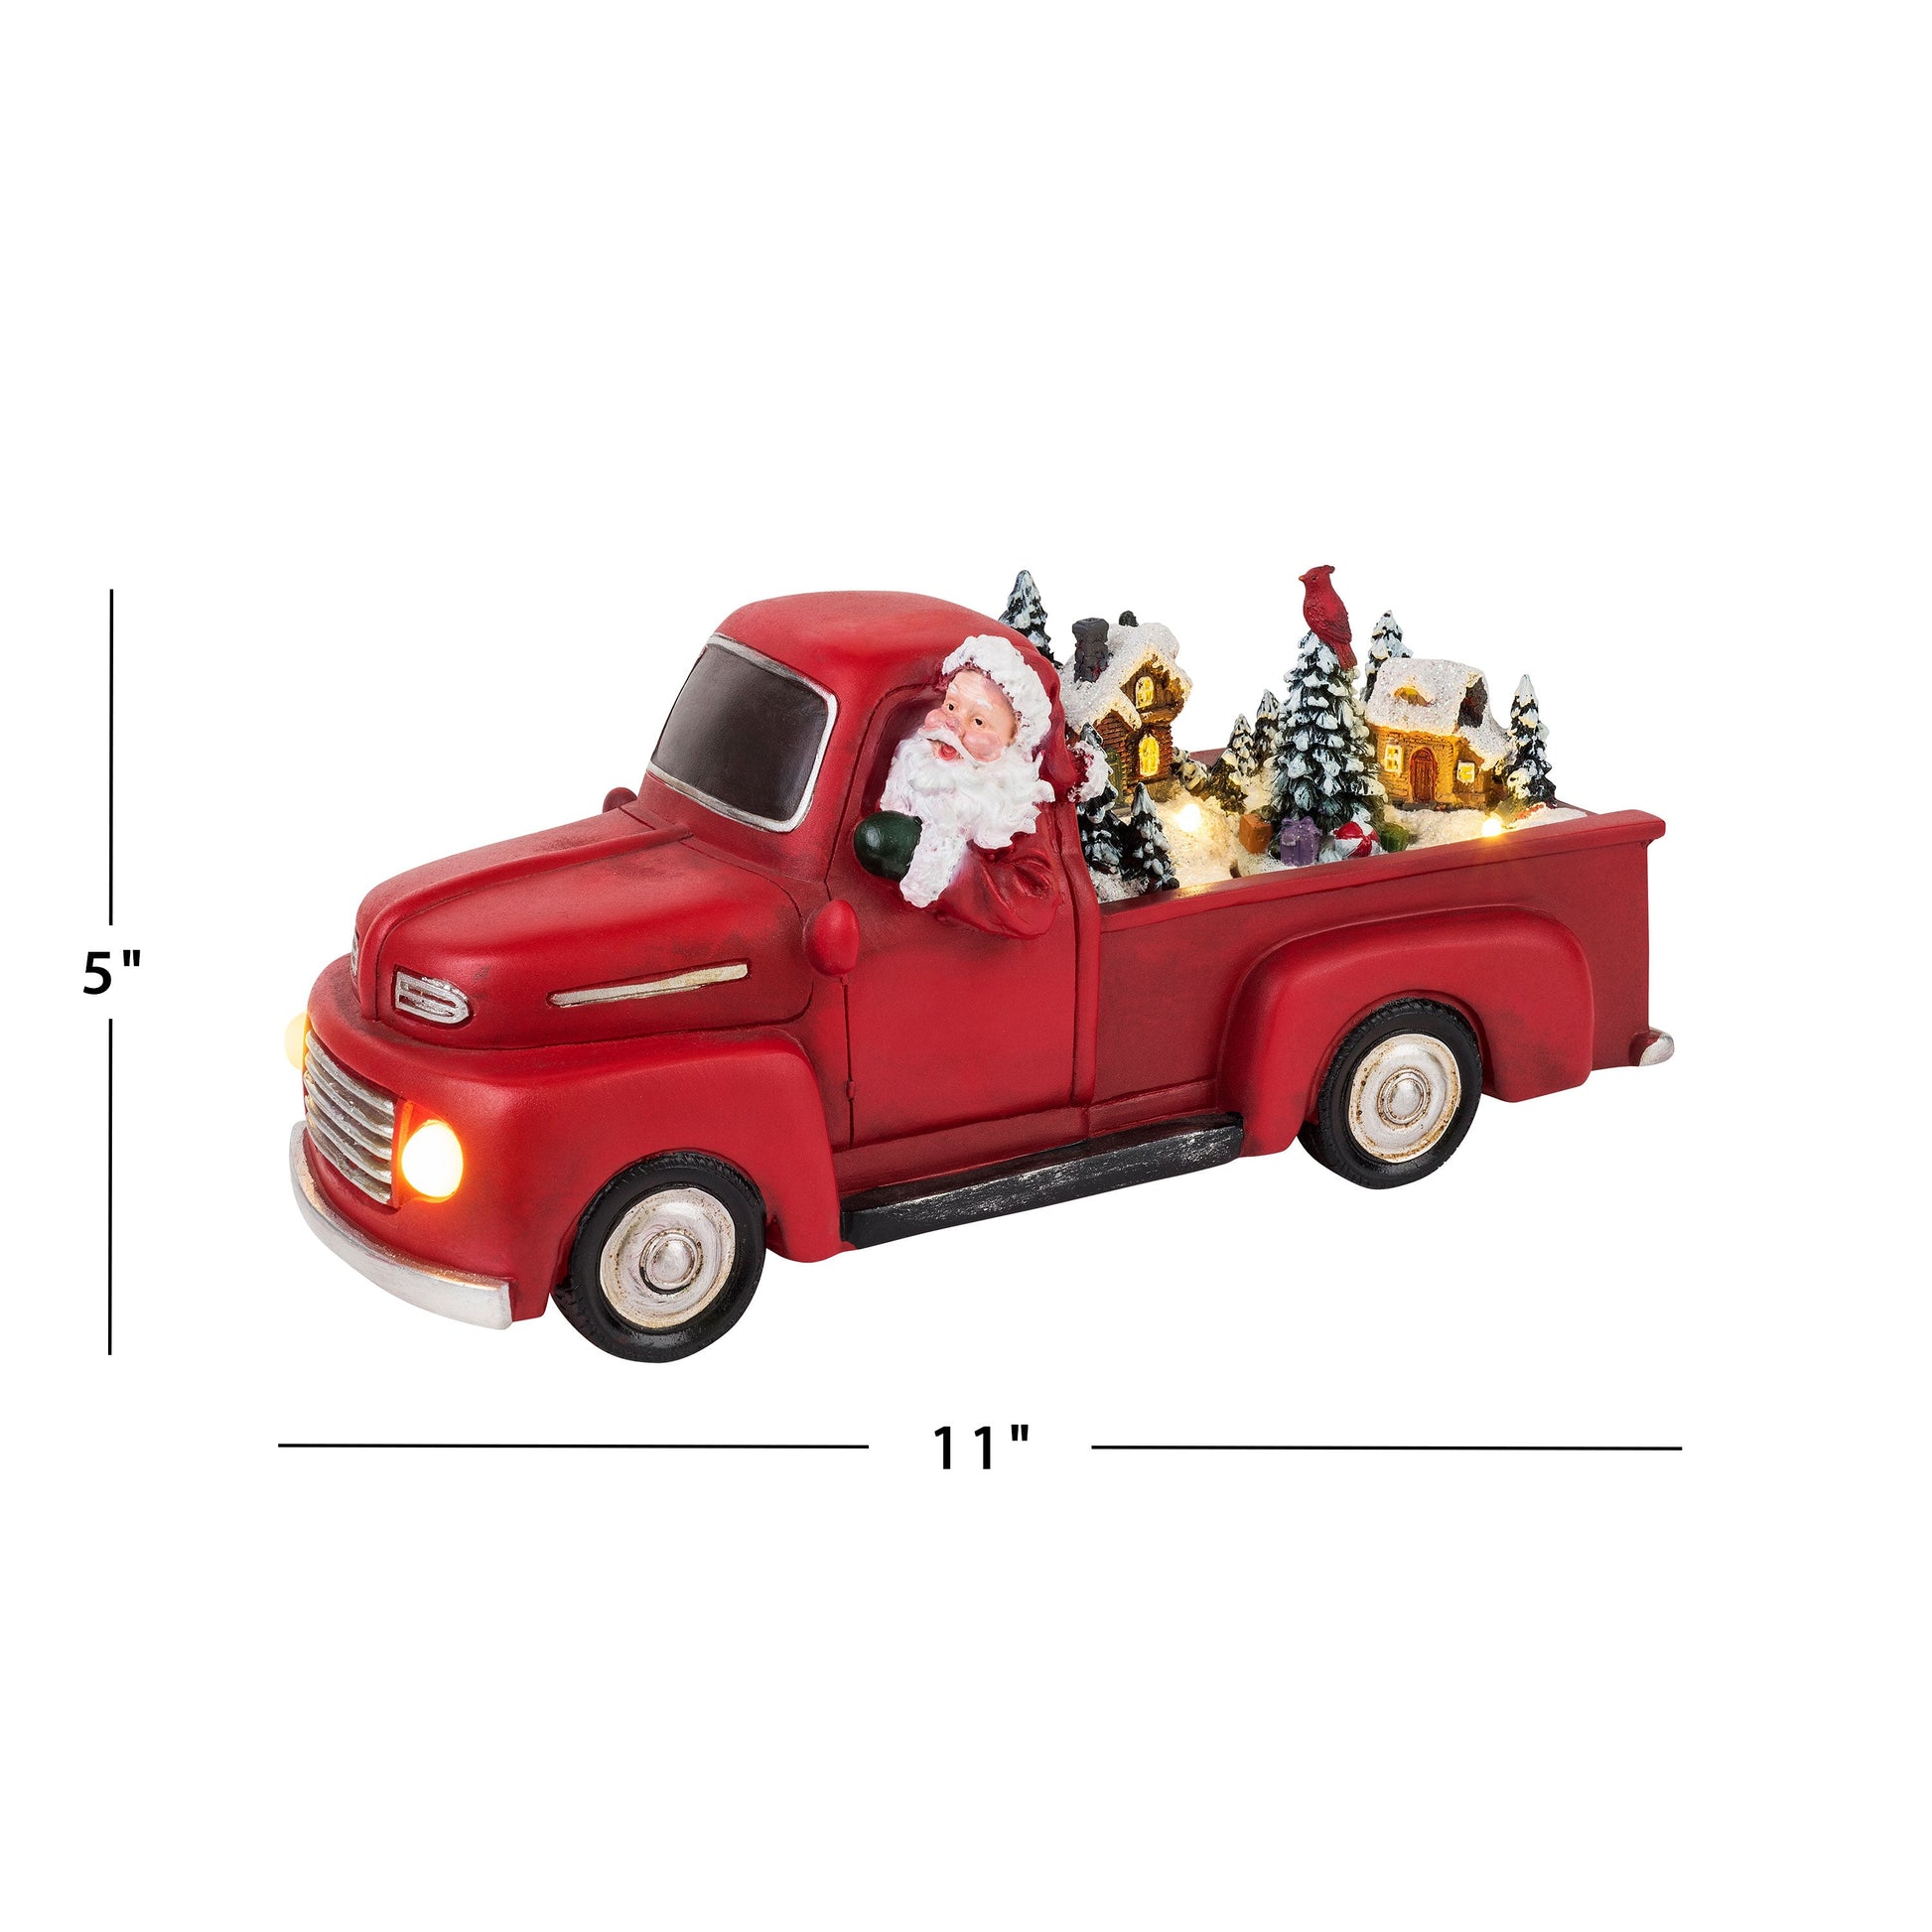 11" Animated Nostalgic Red Truck - White Santa